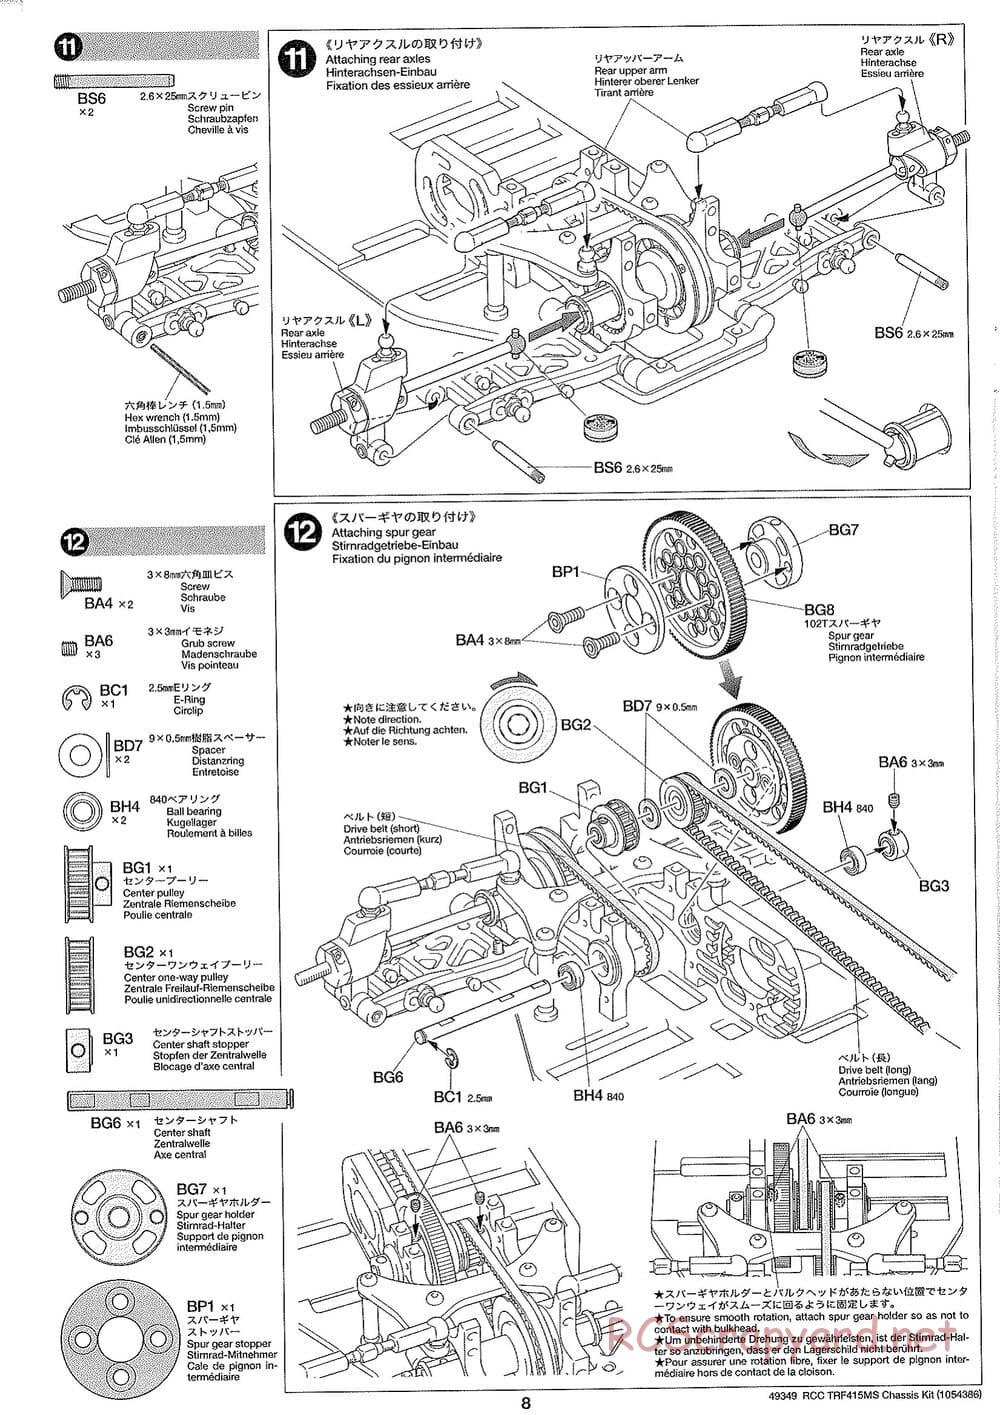 Tamiya - TRF415-MS Chassis - Manual - Page 8